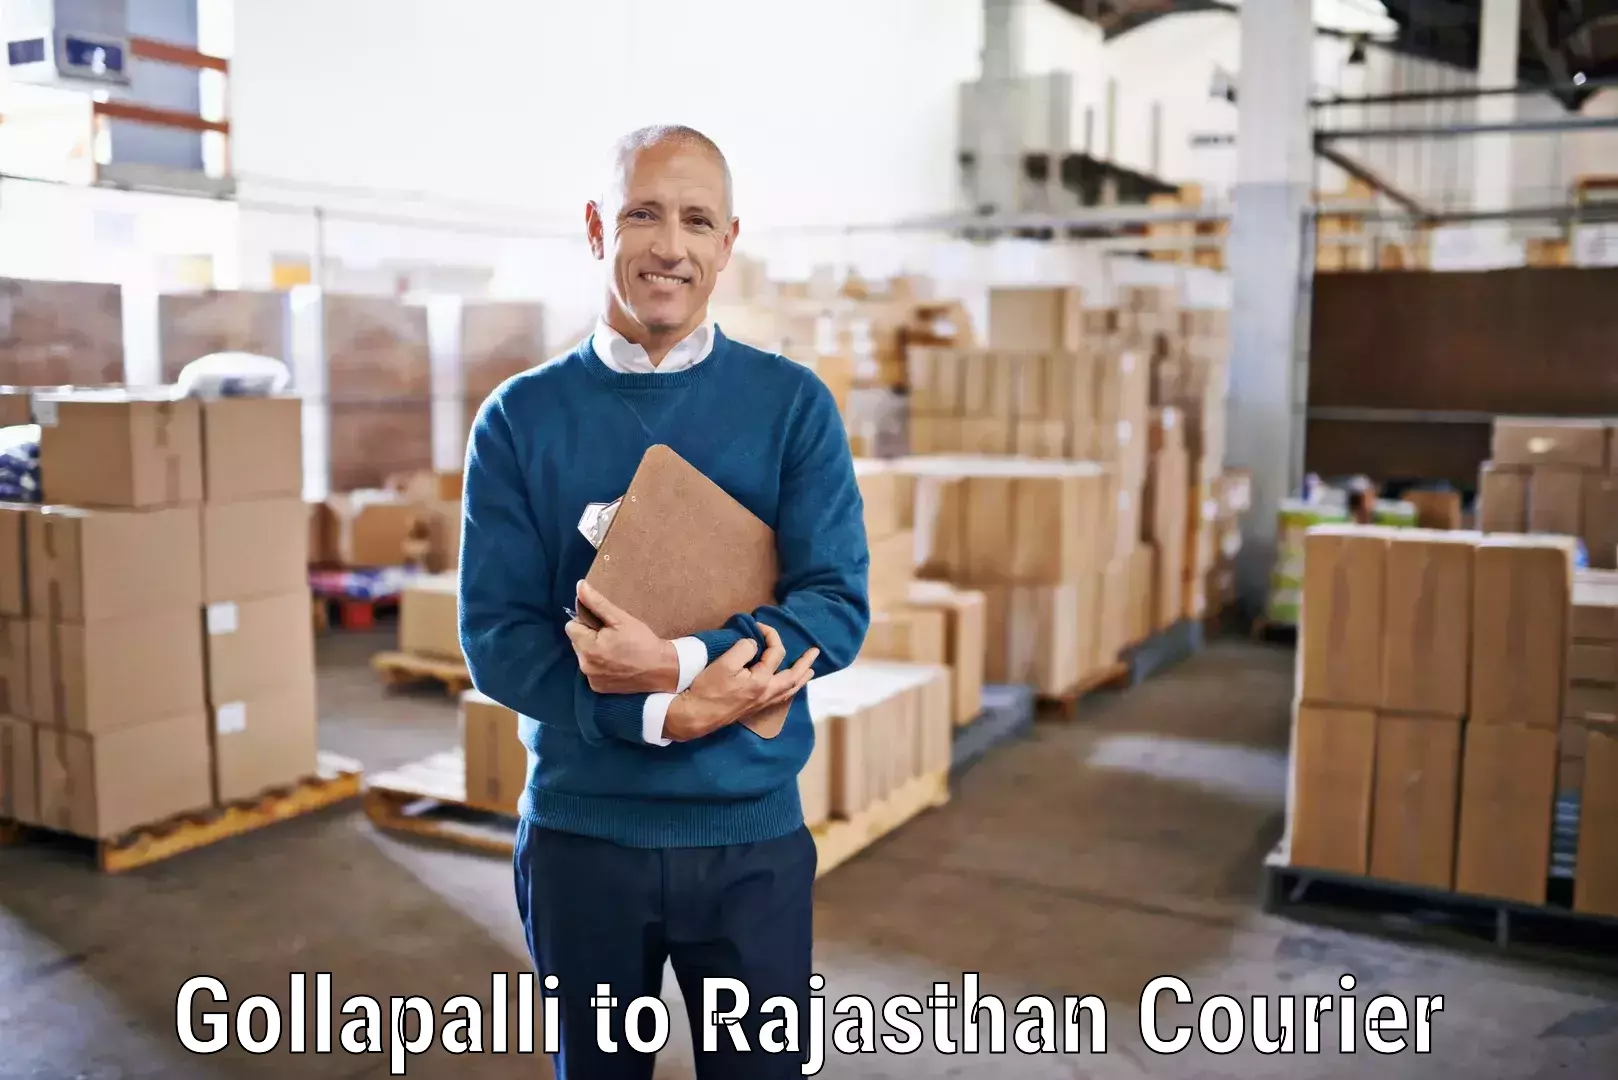 Delivery service partnership Gollapalli to Kishangarh